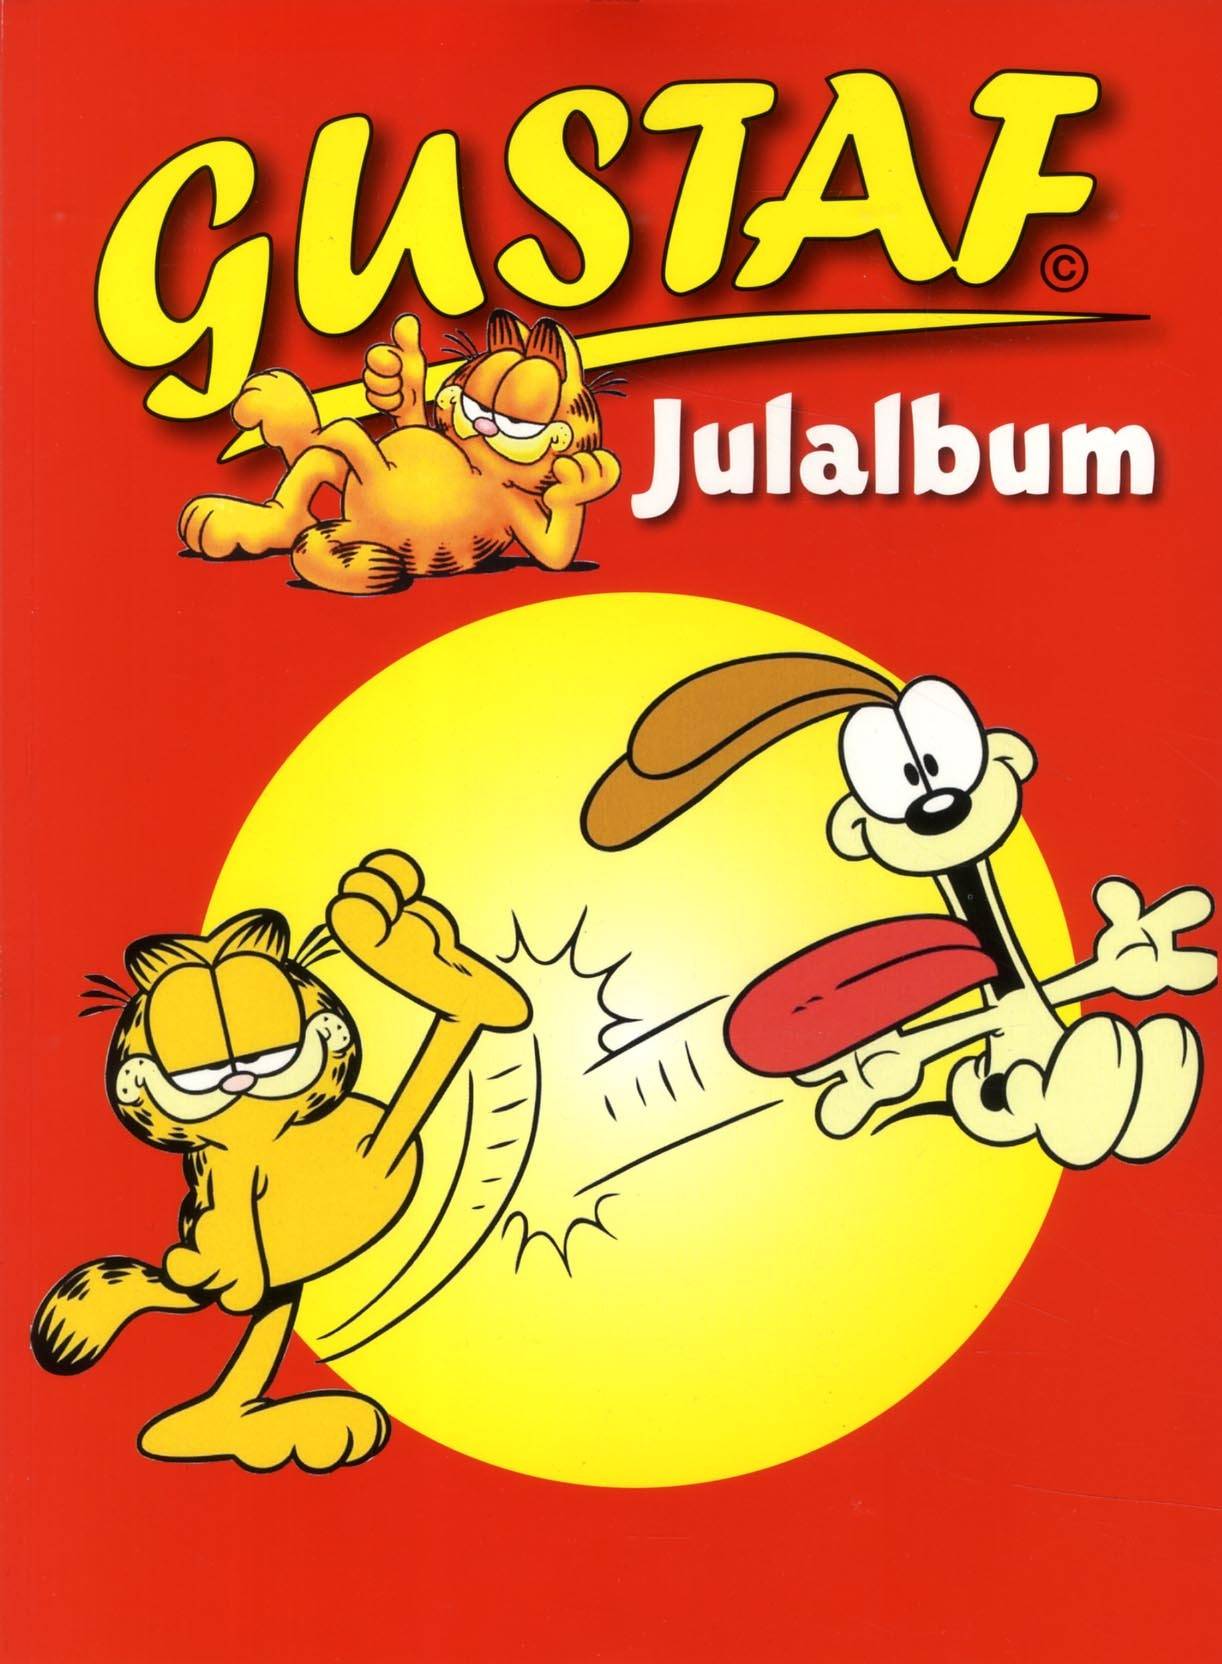 Gustaf Julalbum